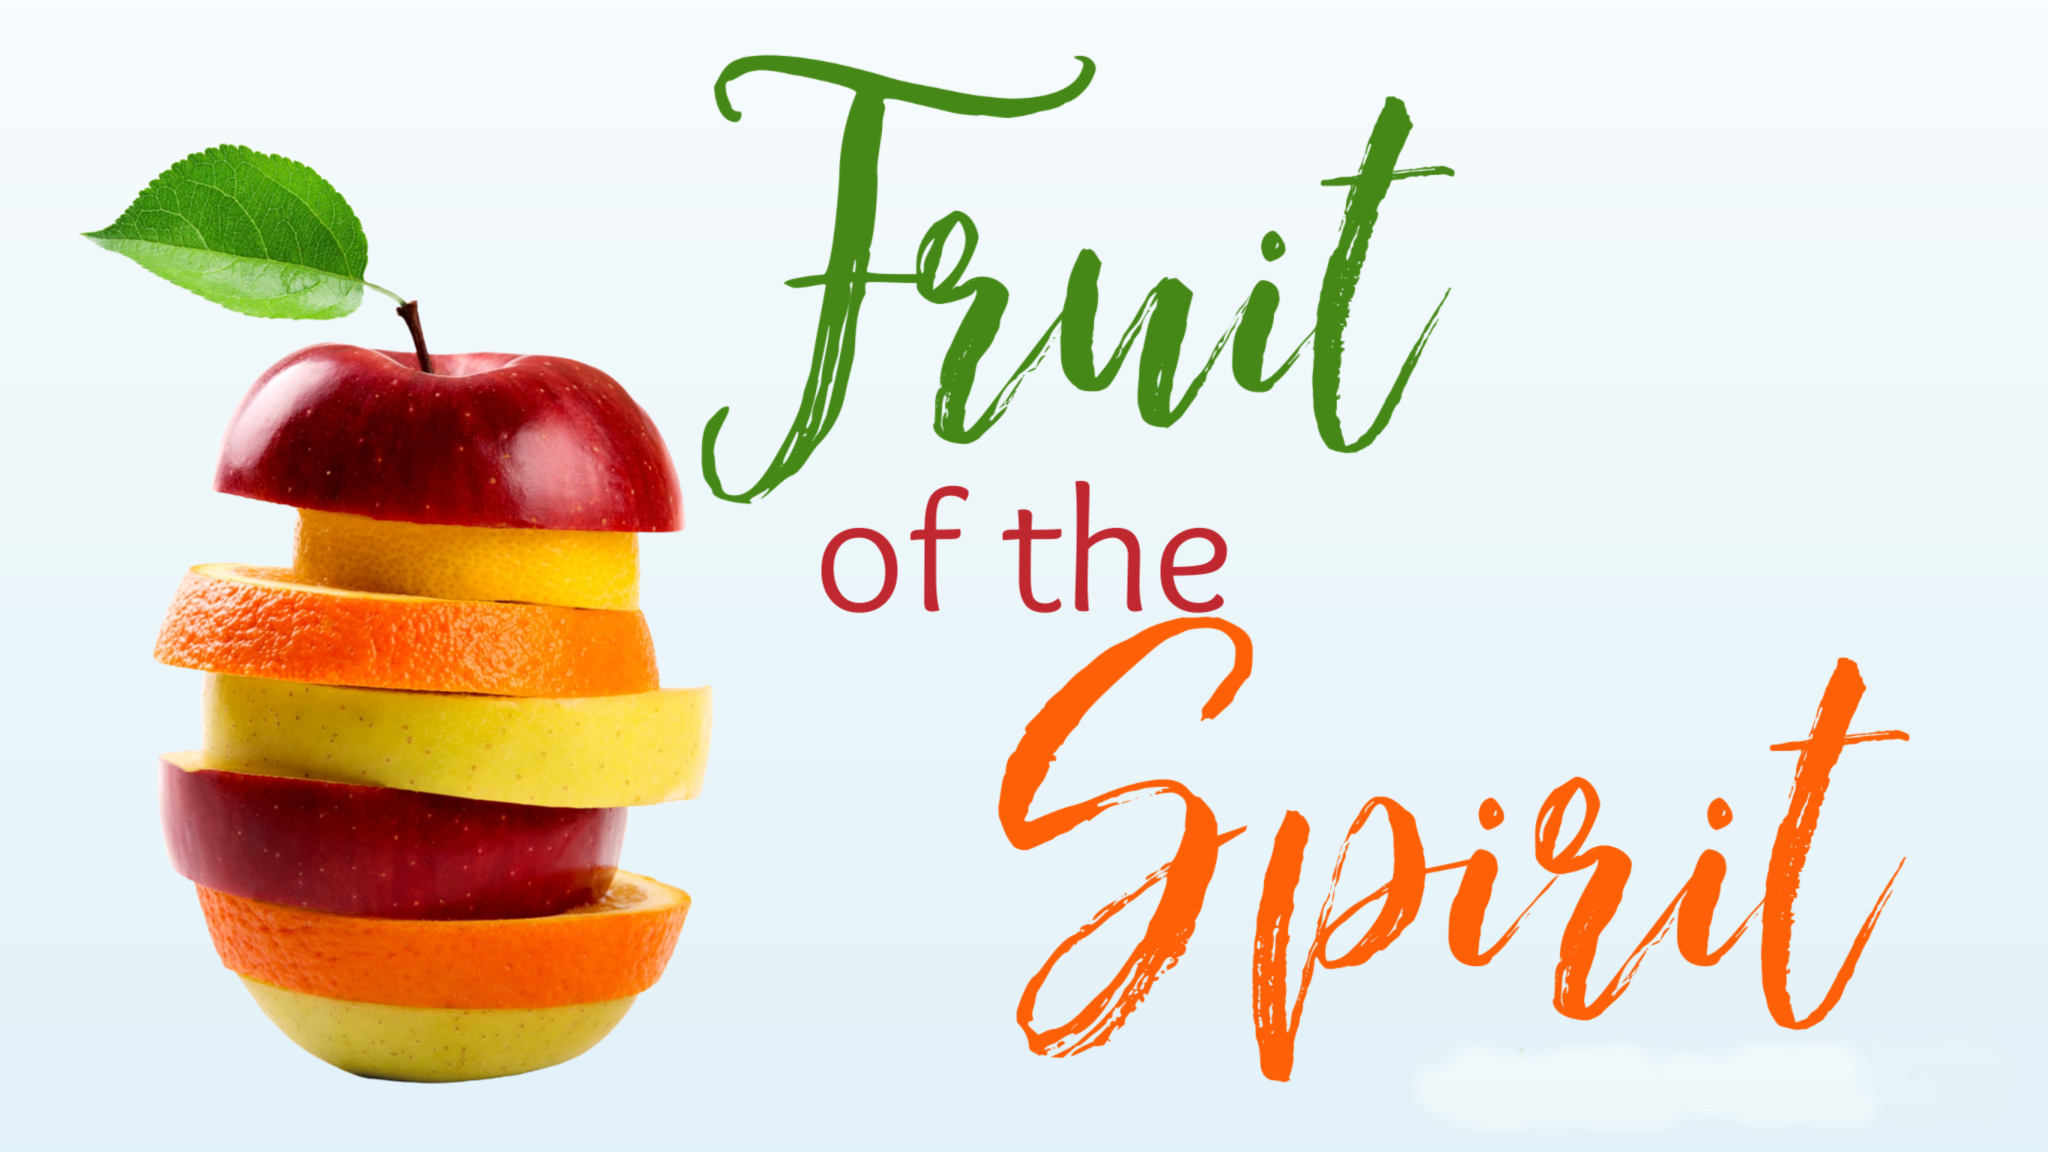 The Fruitful Life - Self-Control